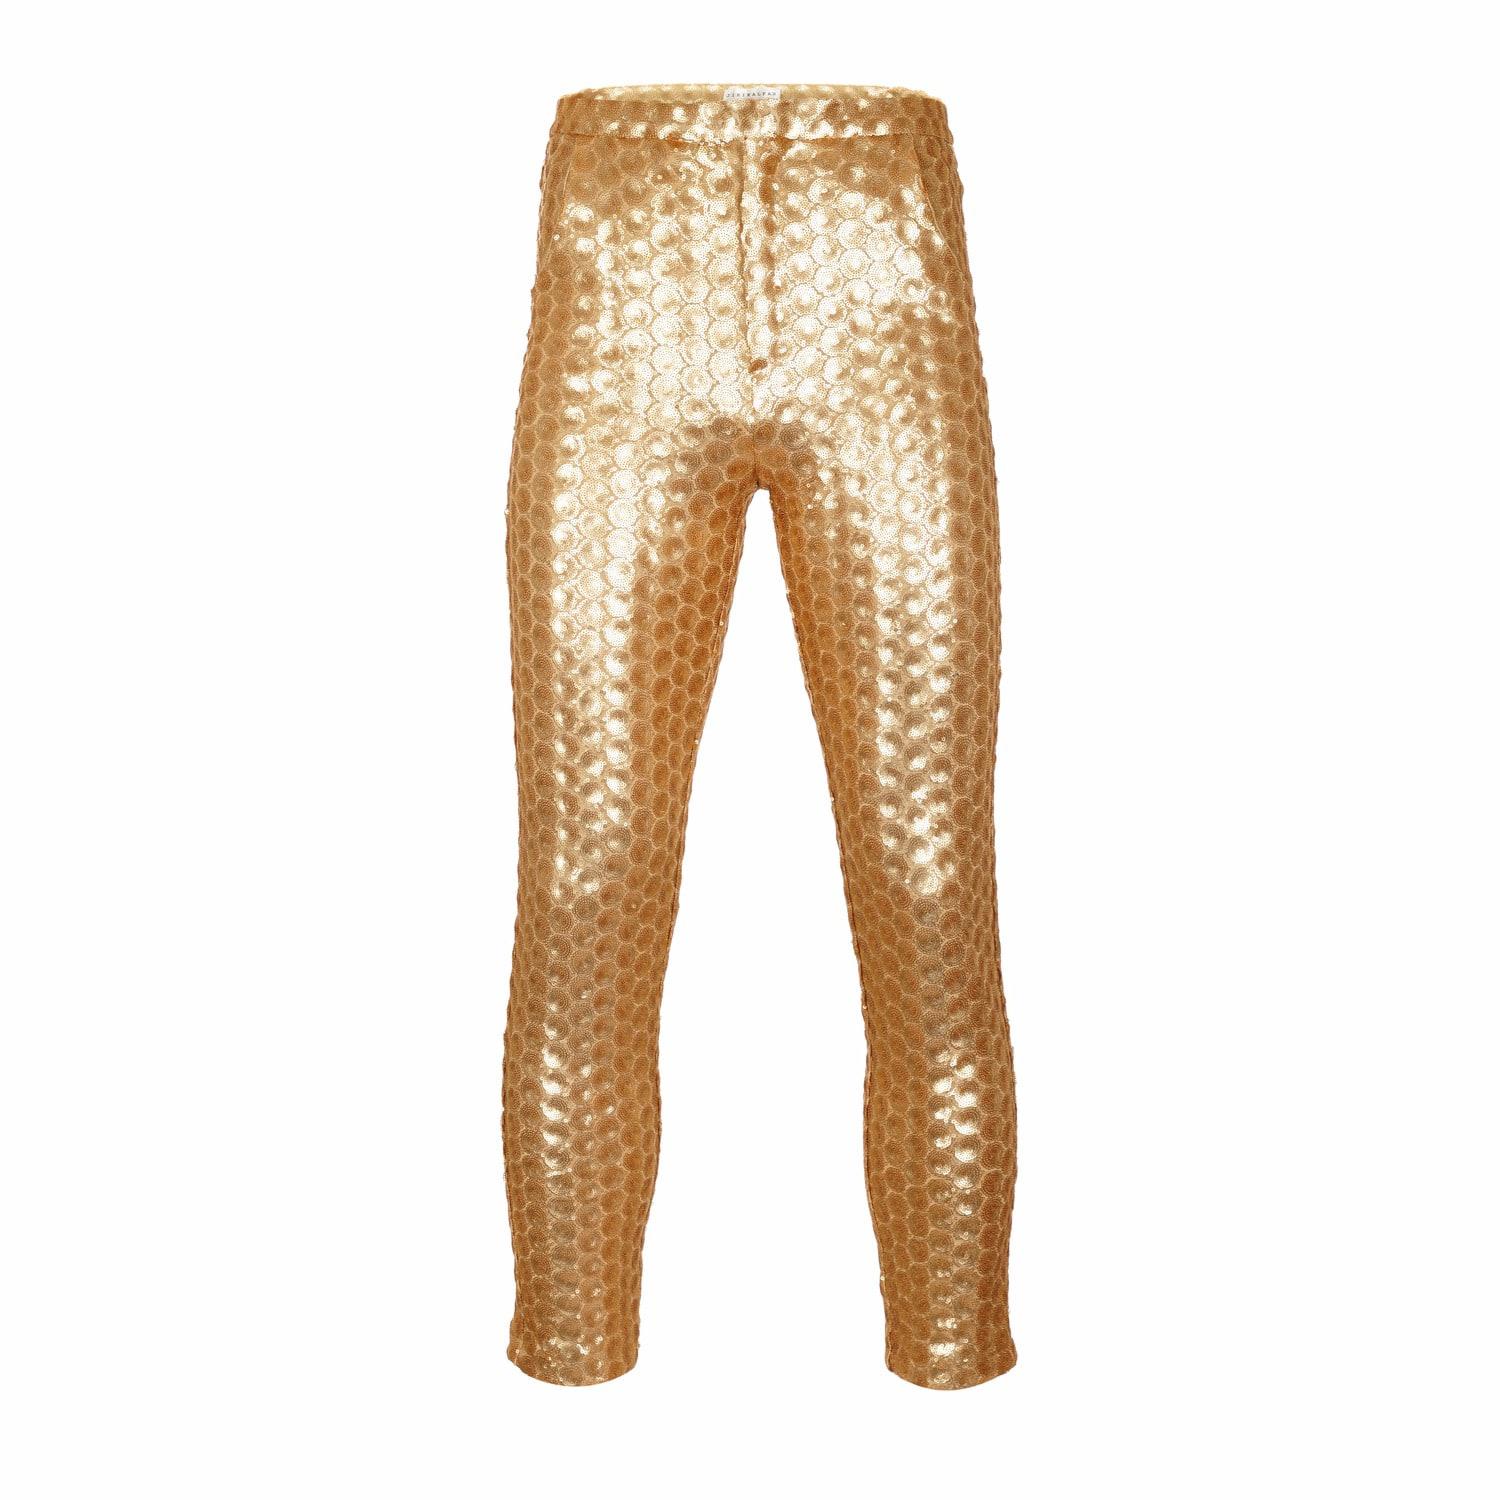 Lyst - Jiri Kalfar Gold Sequin Trousers in Metallic for Men